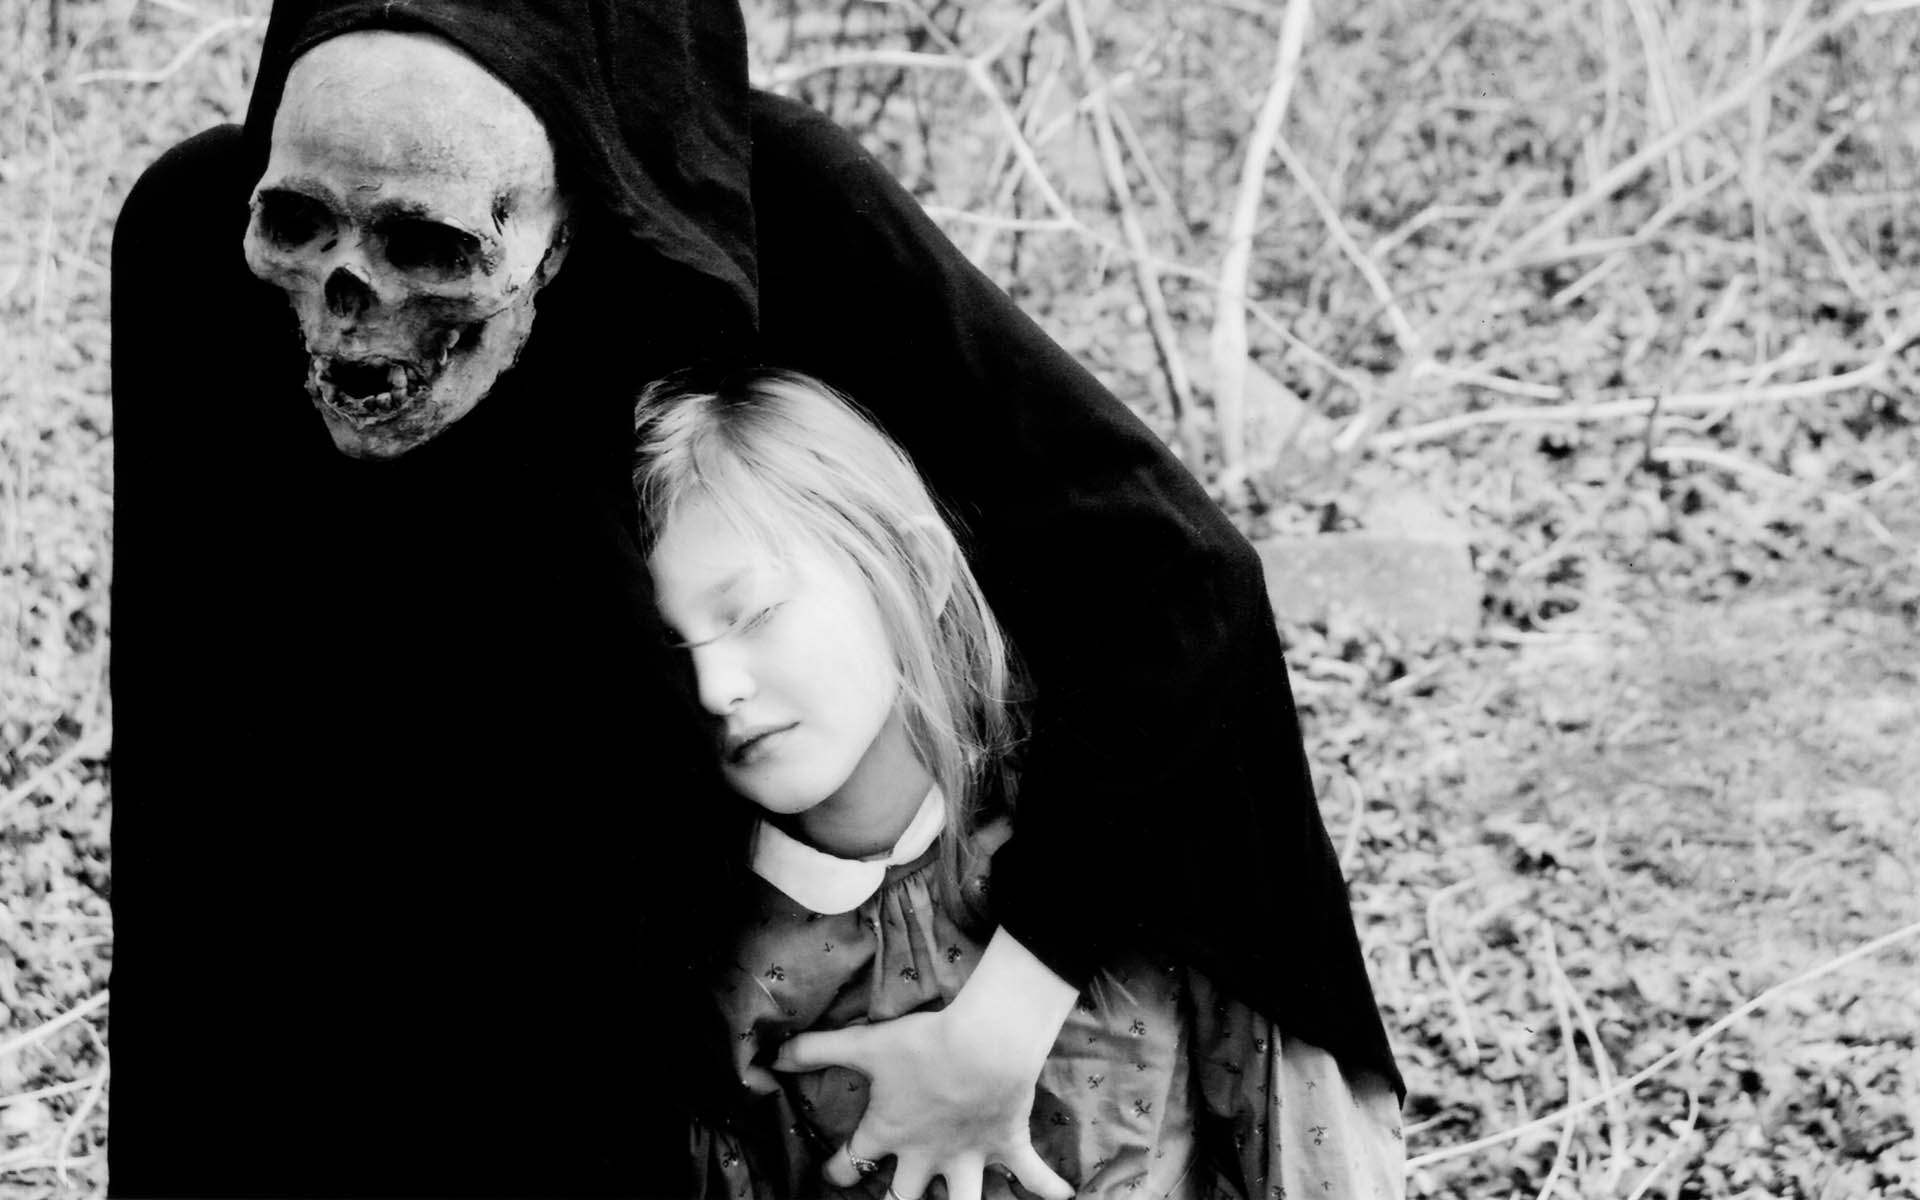 Dark death gothic grim reaper mask skull costume evil mood emotion